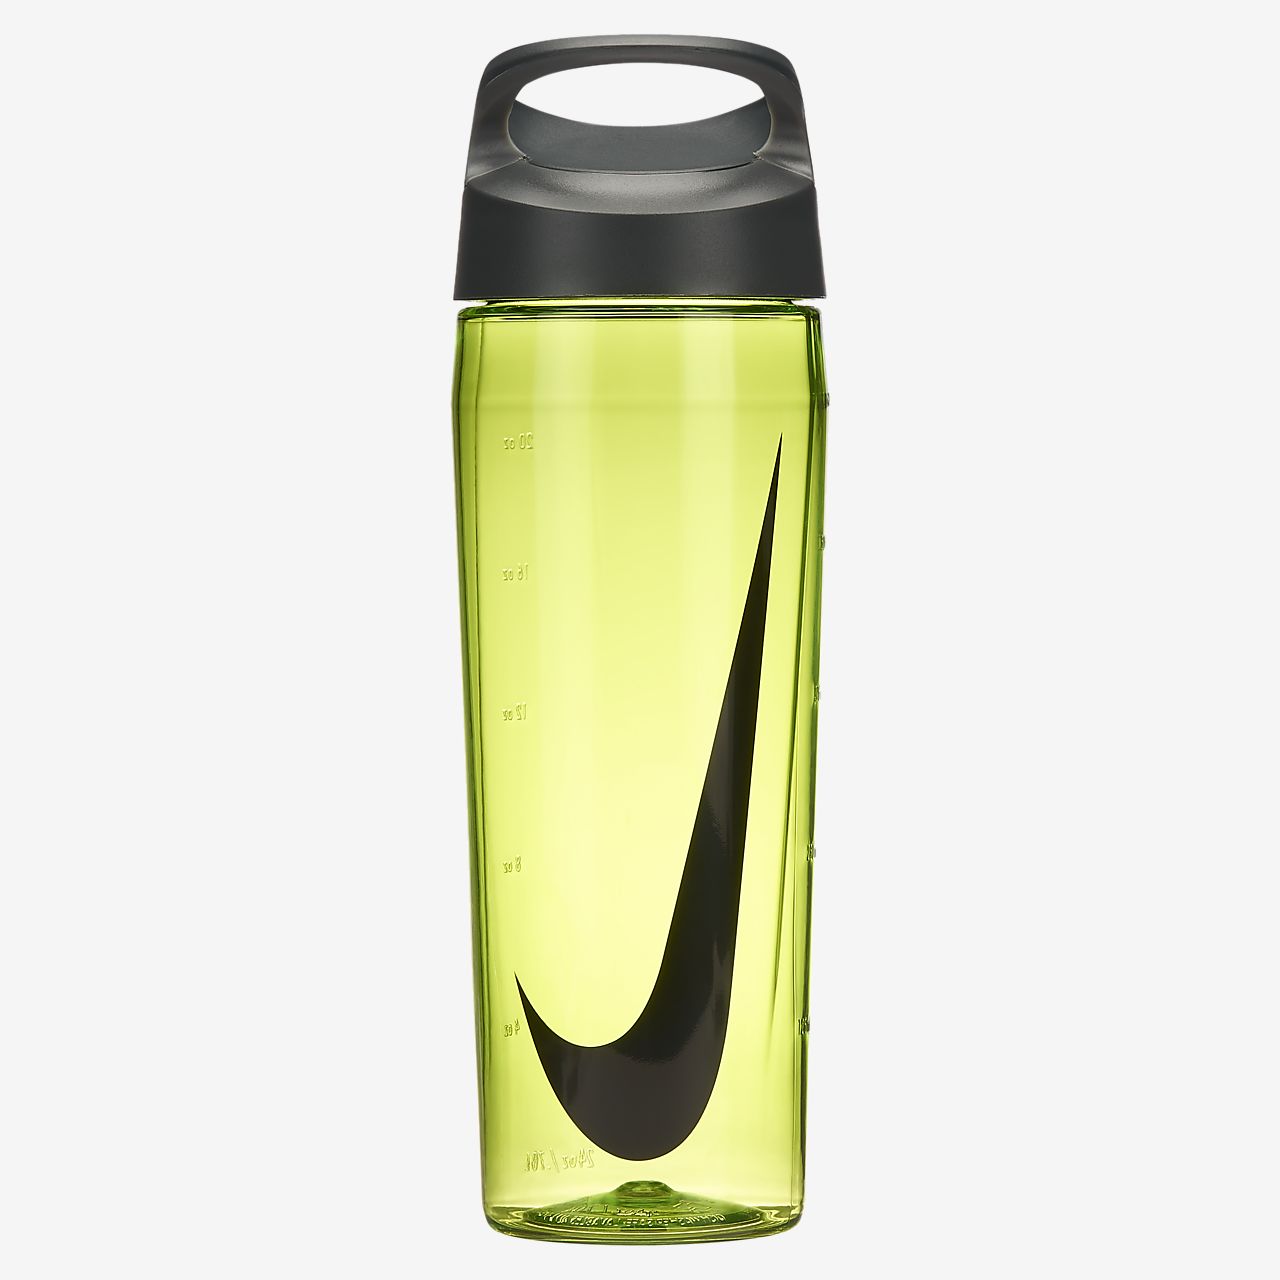 yellow nike water bottle